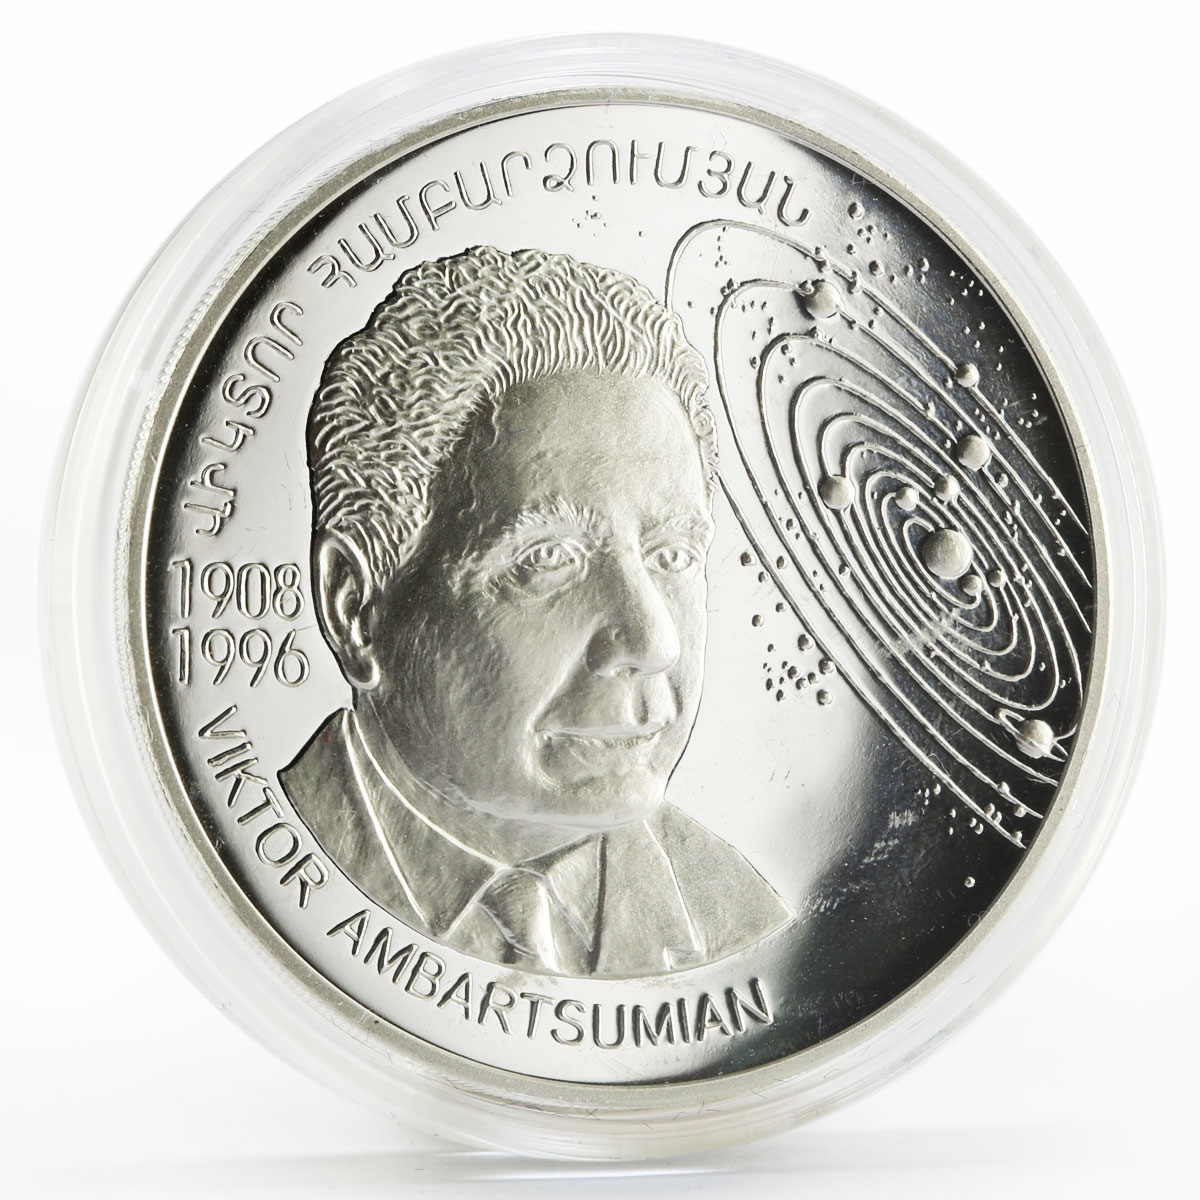 Armenia 1000 dram Centennial of Scientist Viktor Ambartsumian silver coin 2008